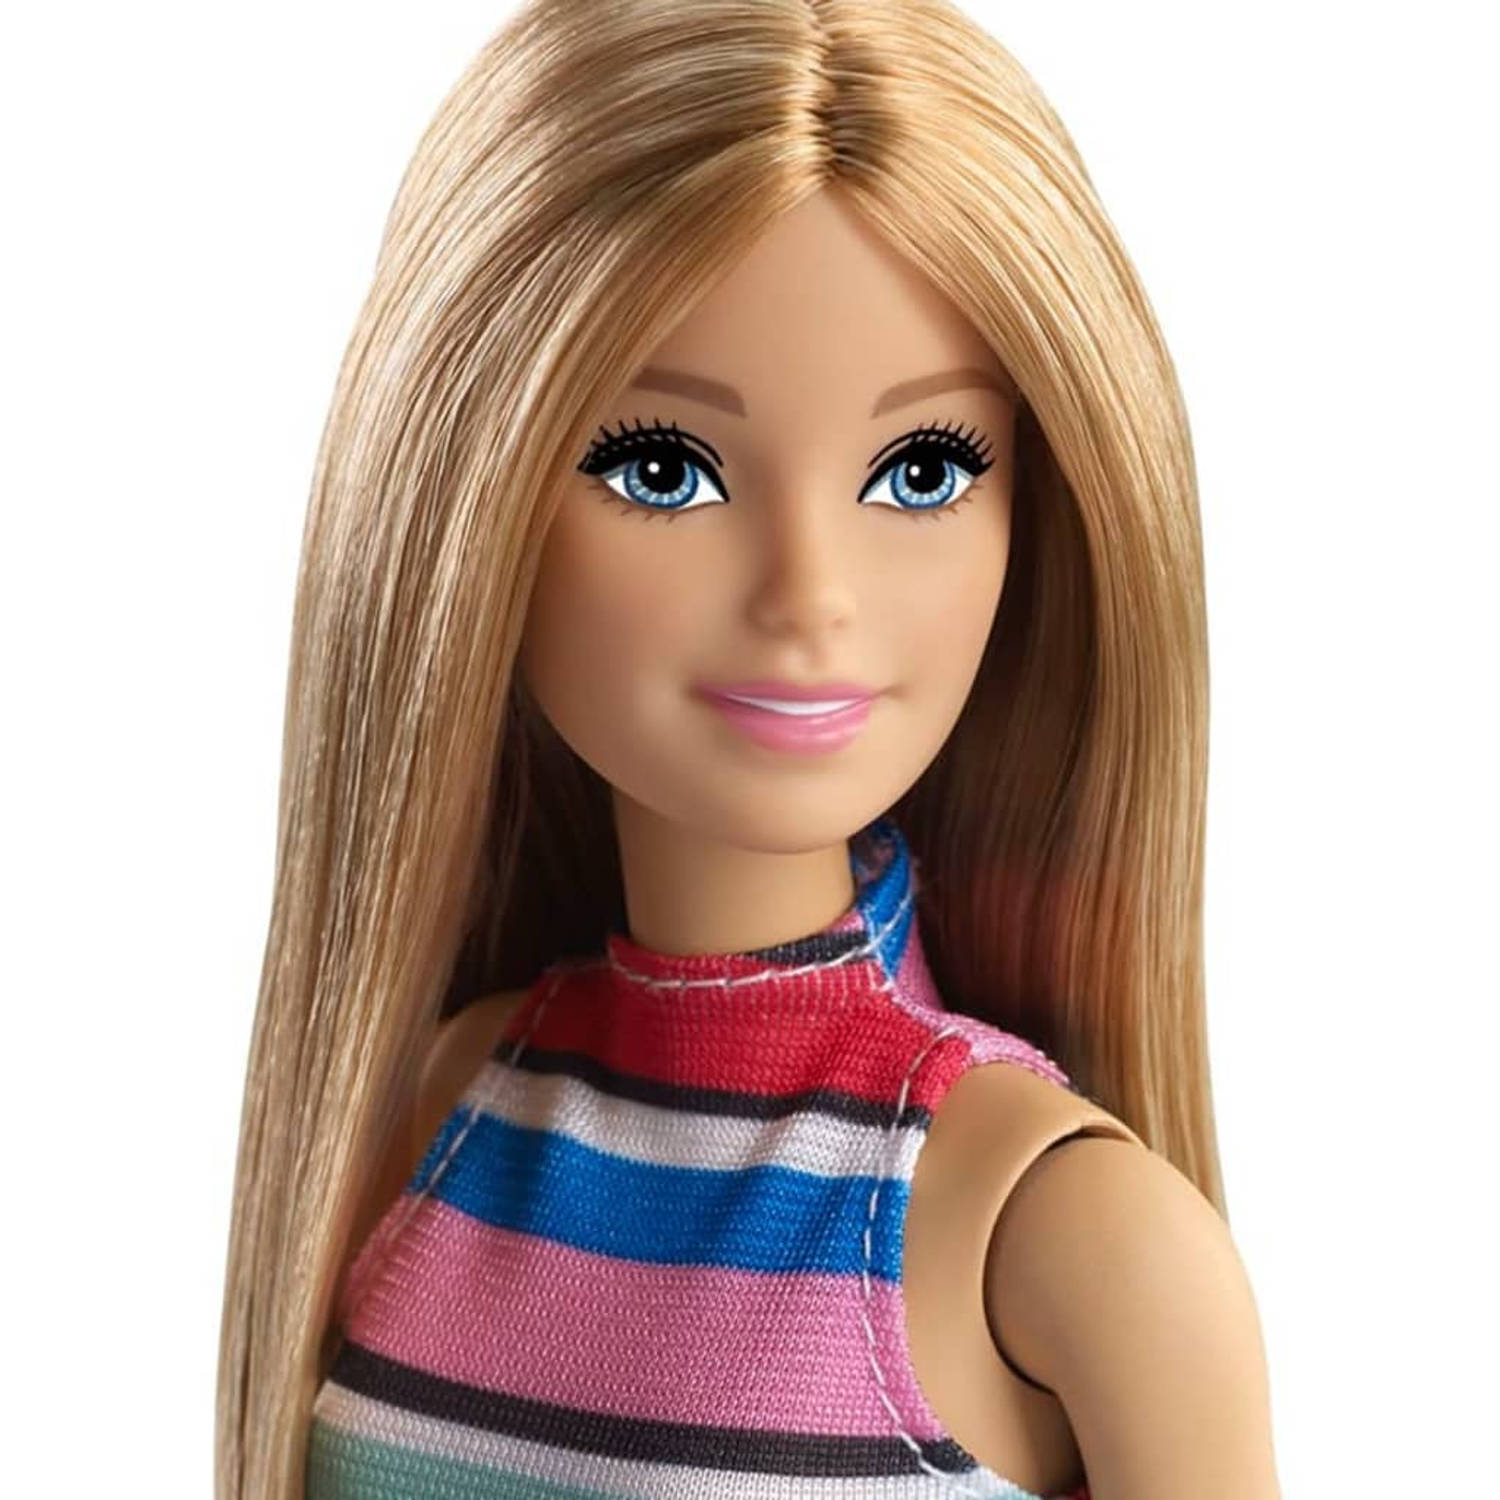 gedragen lancering Enten Barbie Pop en accessoires | Blokker